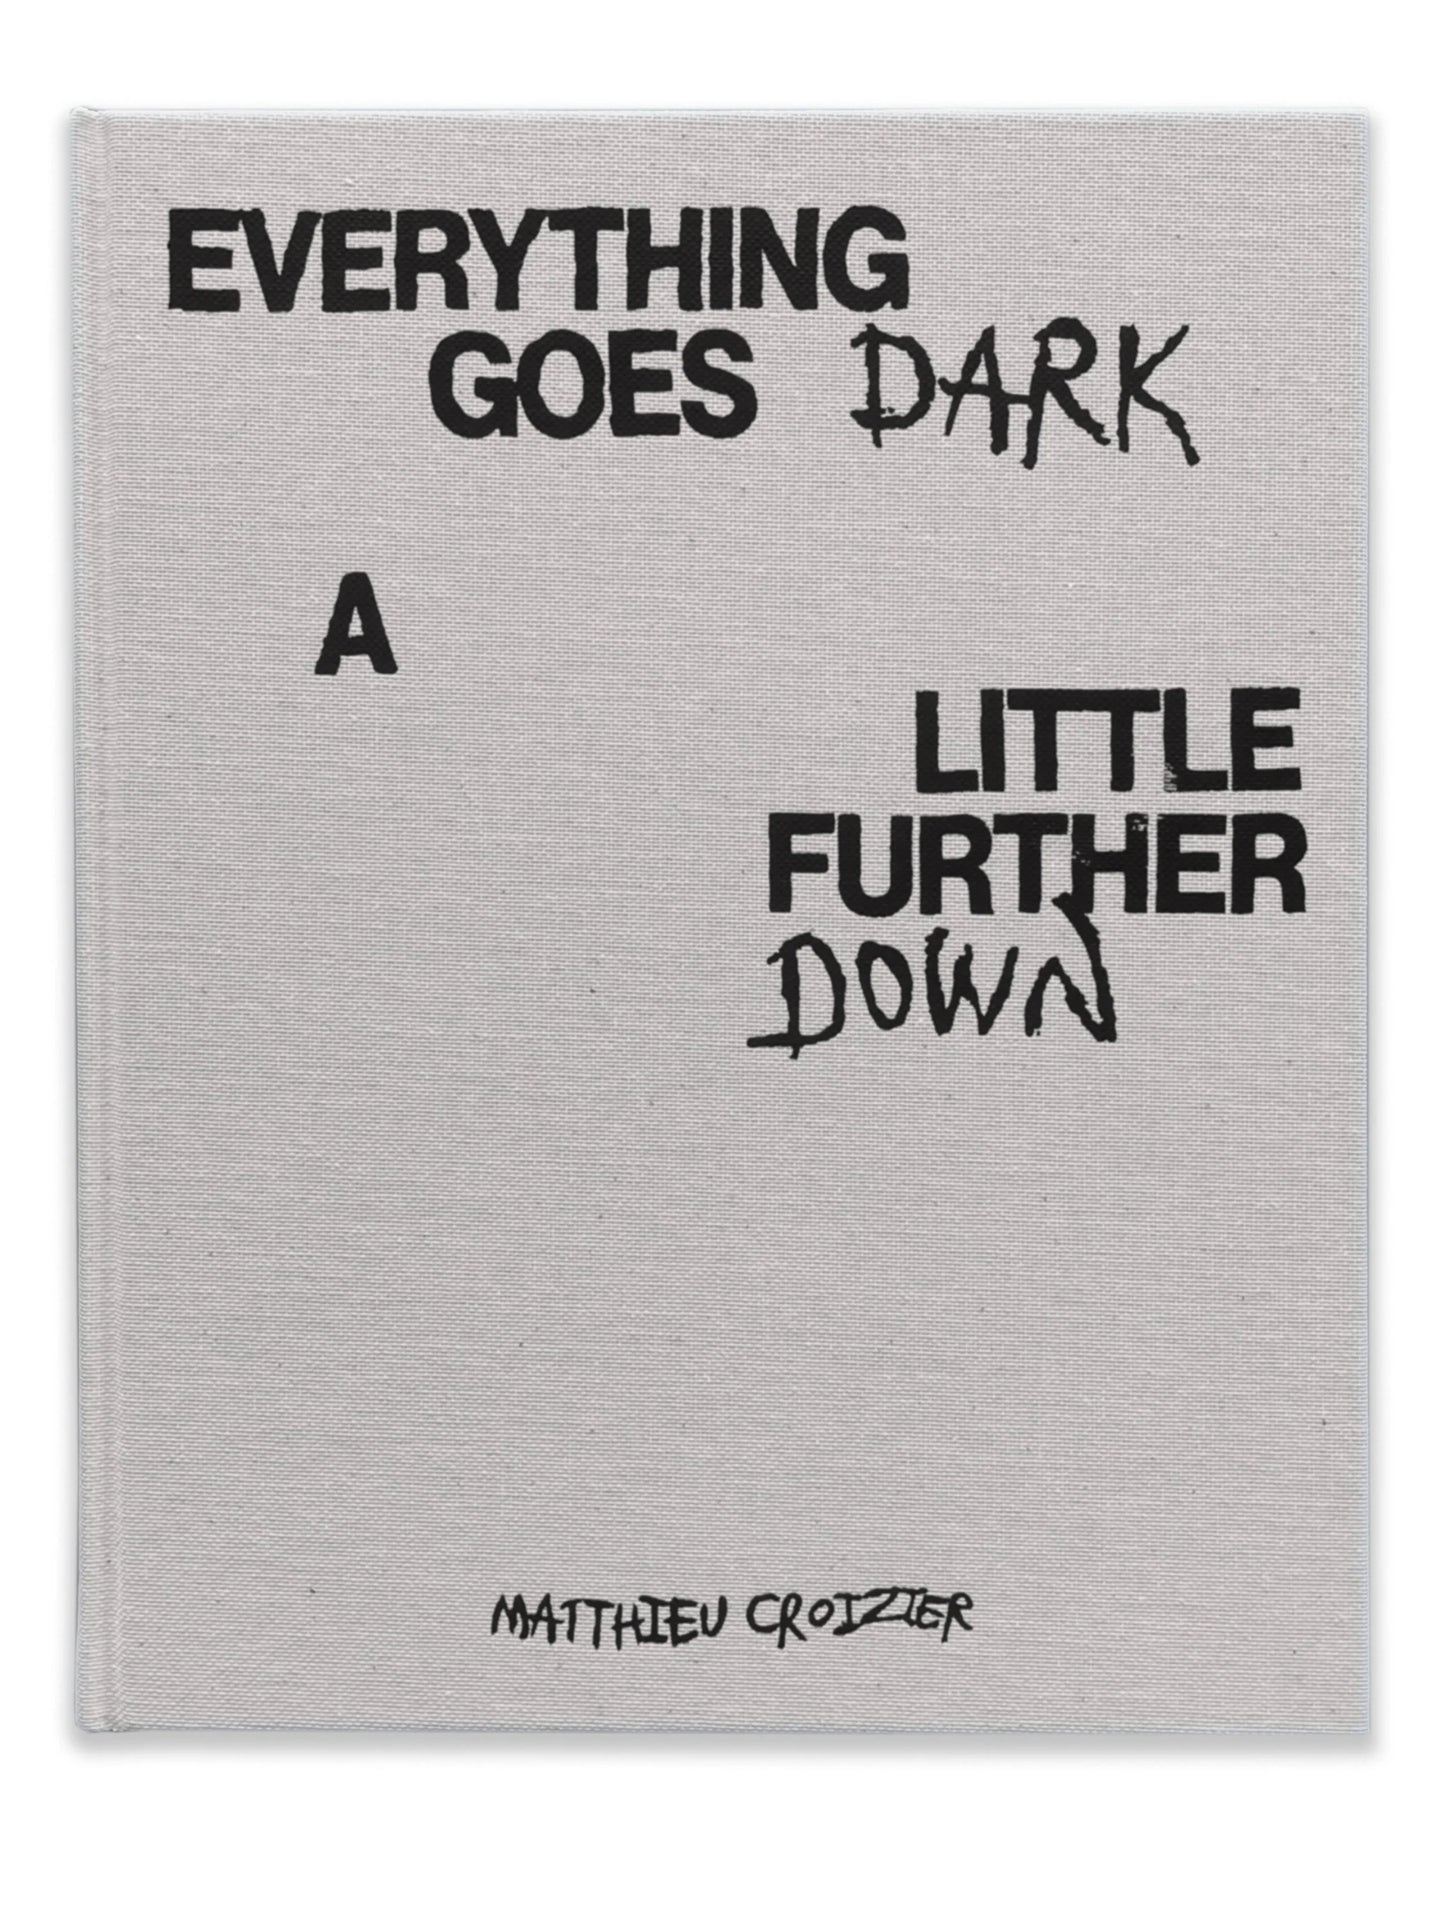 Matthieu Croizier - Everything Goes Dark A Little Further Down